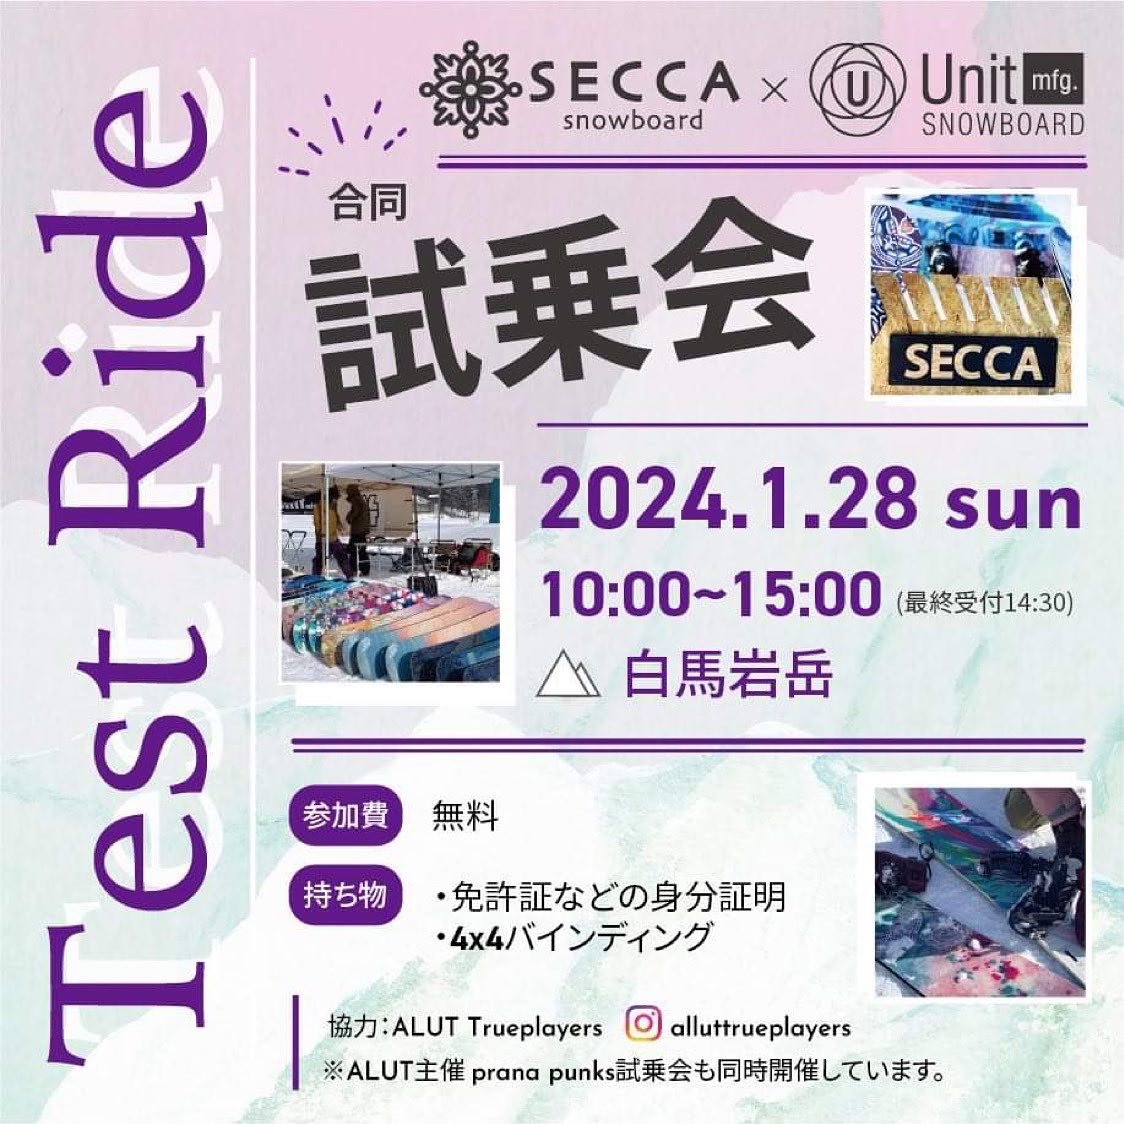 2024.1.28(Sun) SECCA ×UNIT 合同試乗会